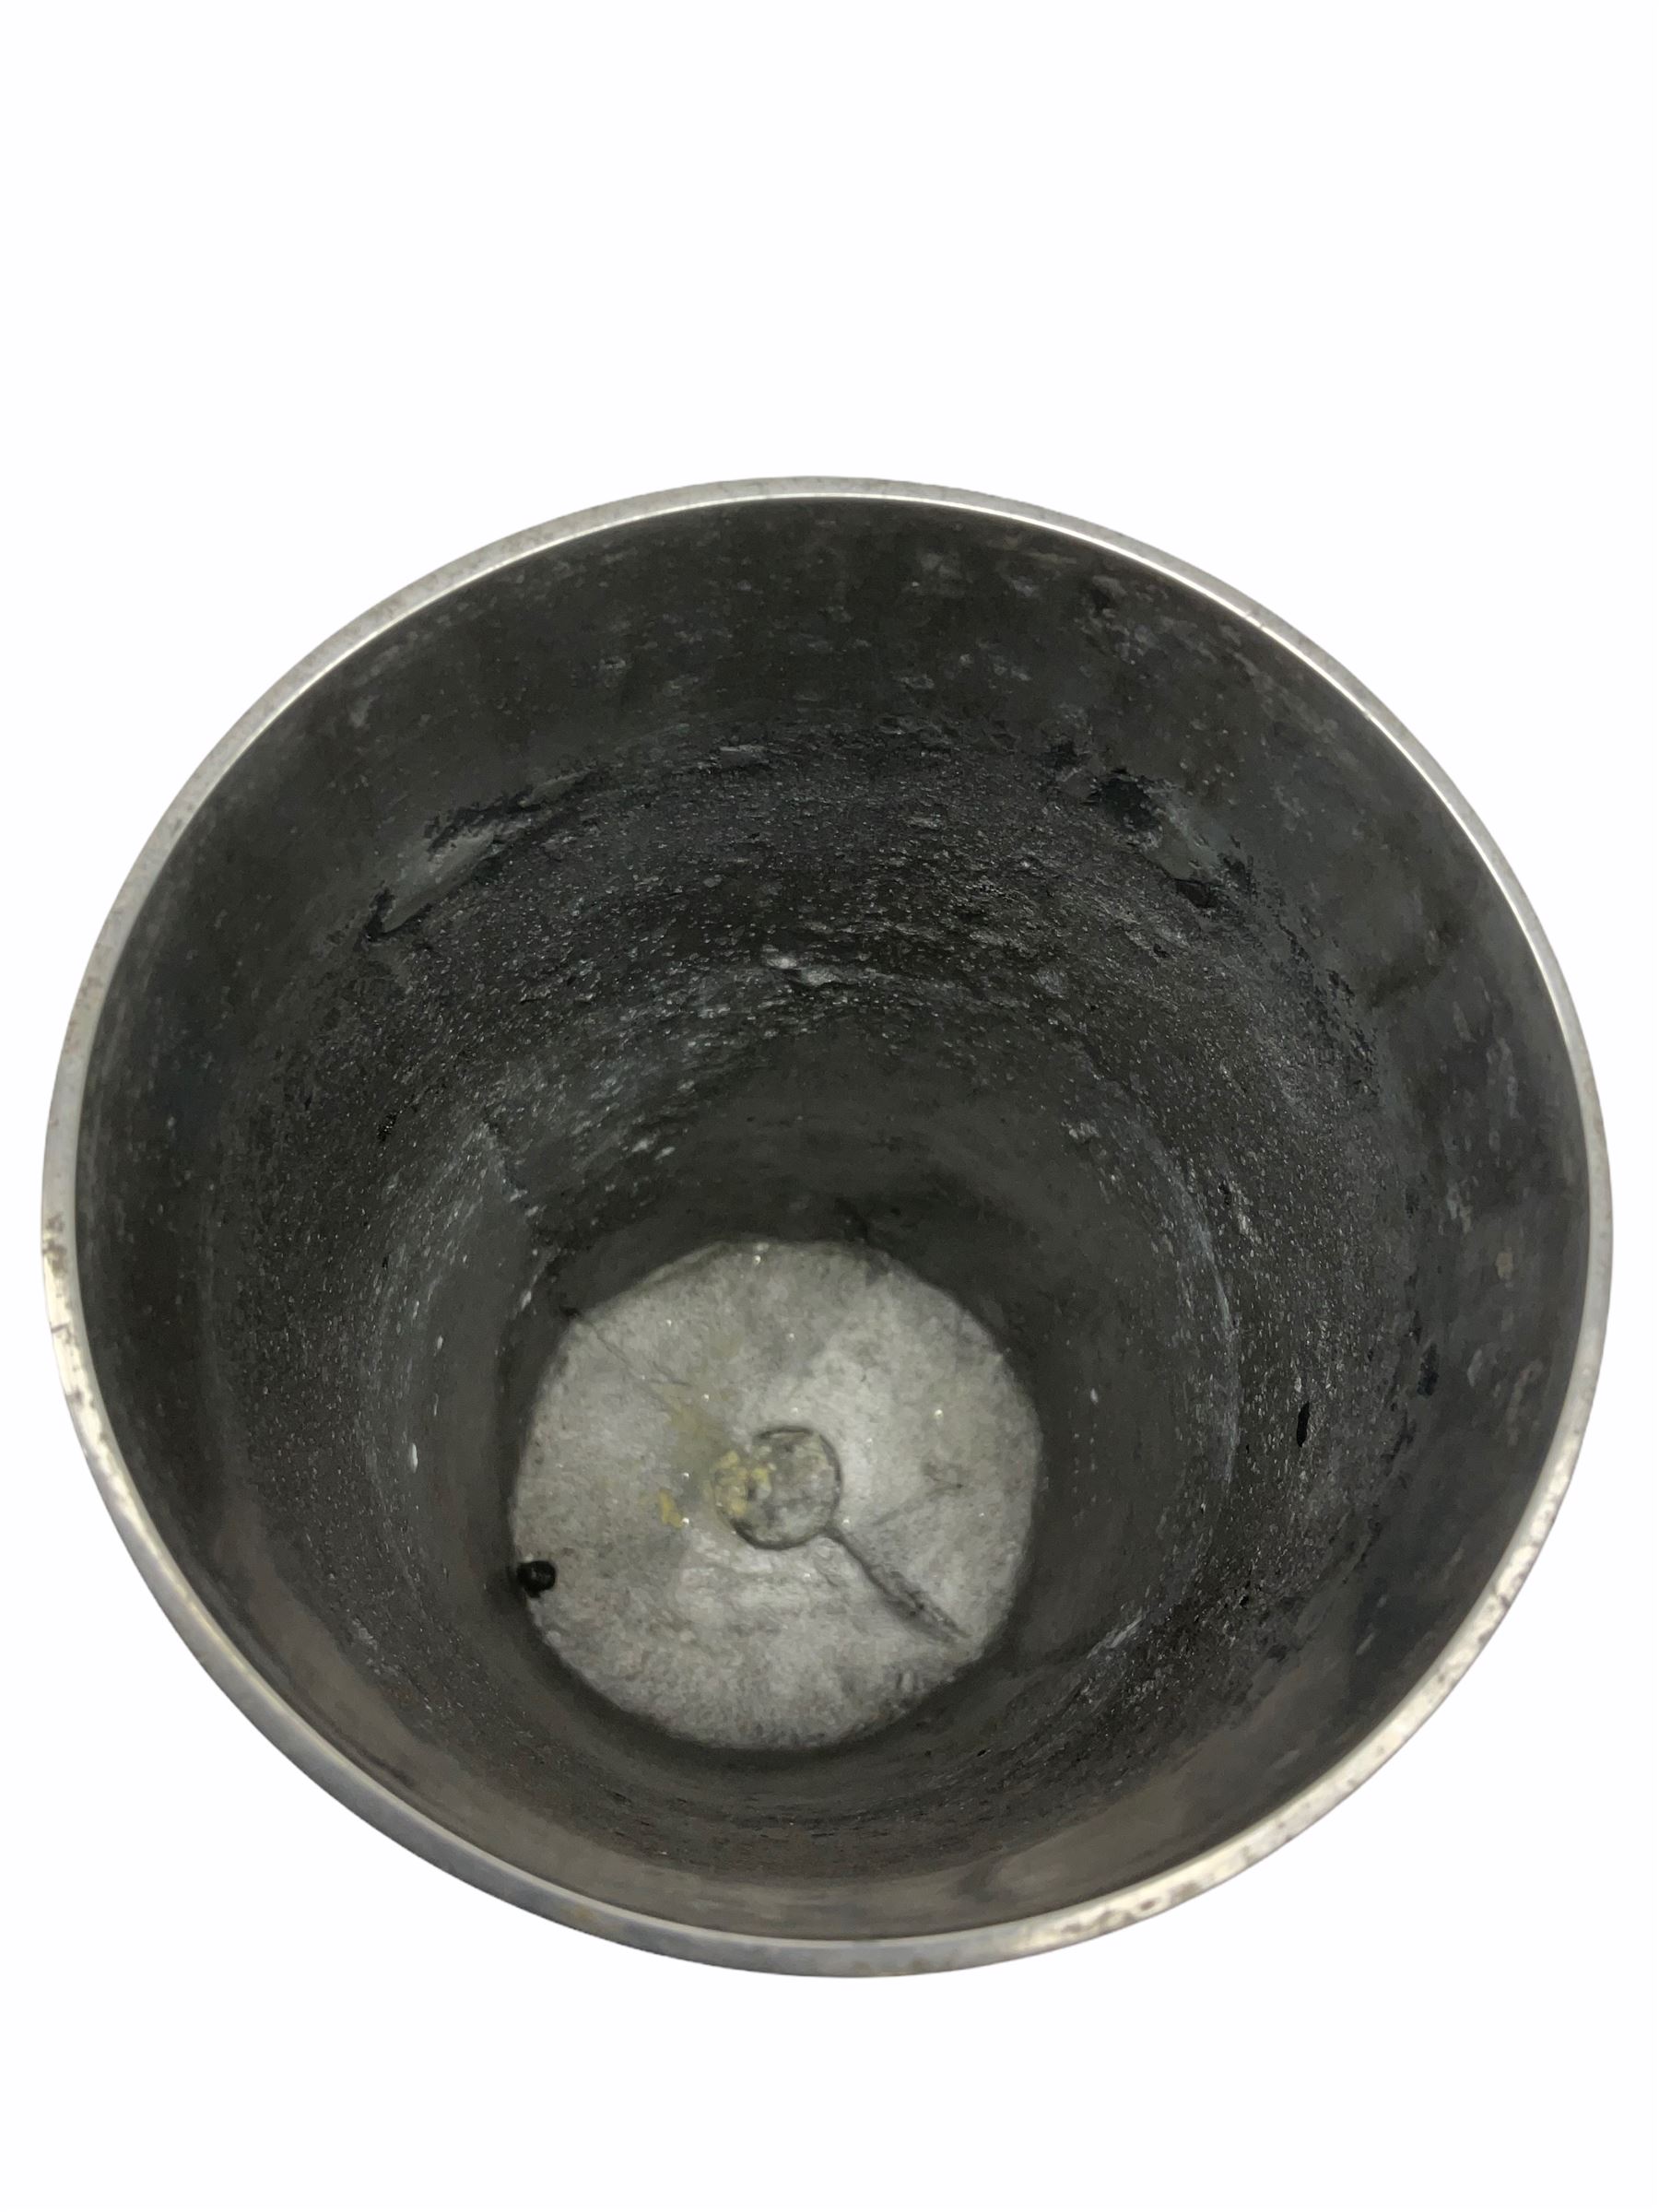 Cylindrical metal vase - Image 3 of 3